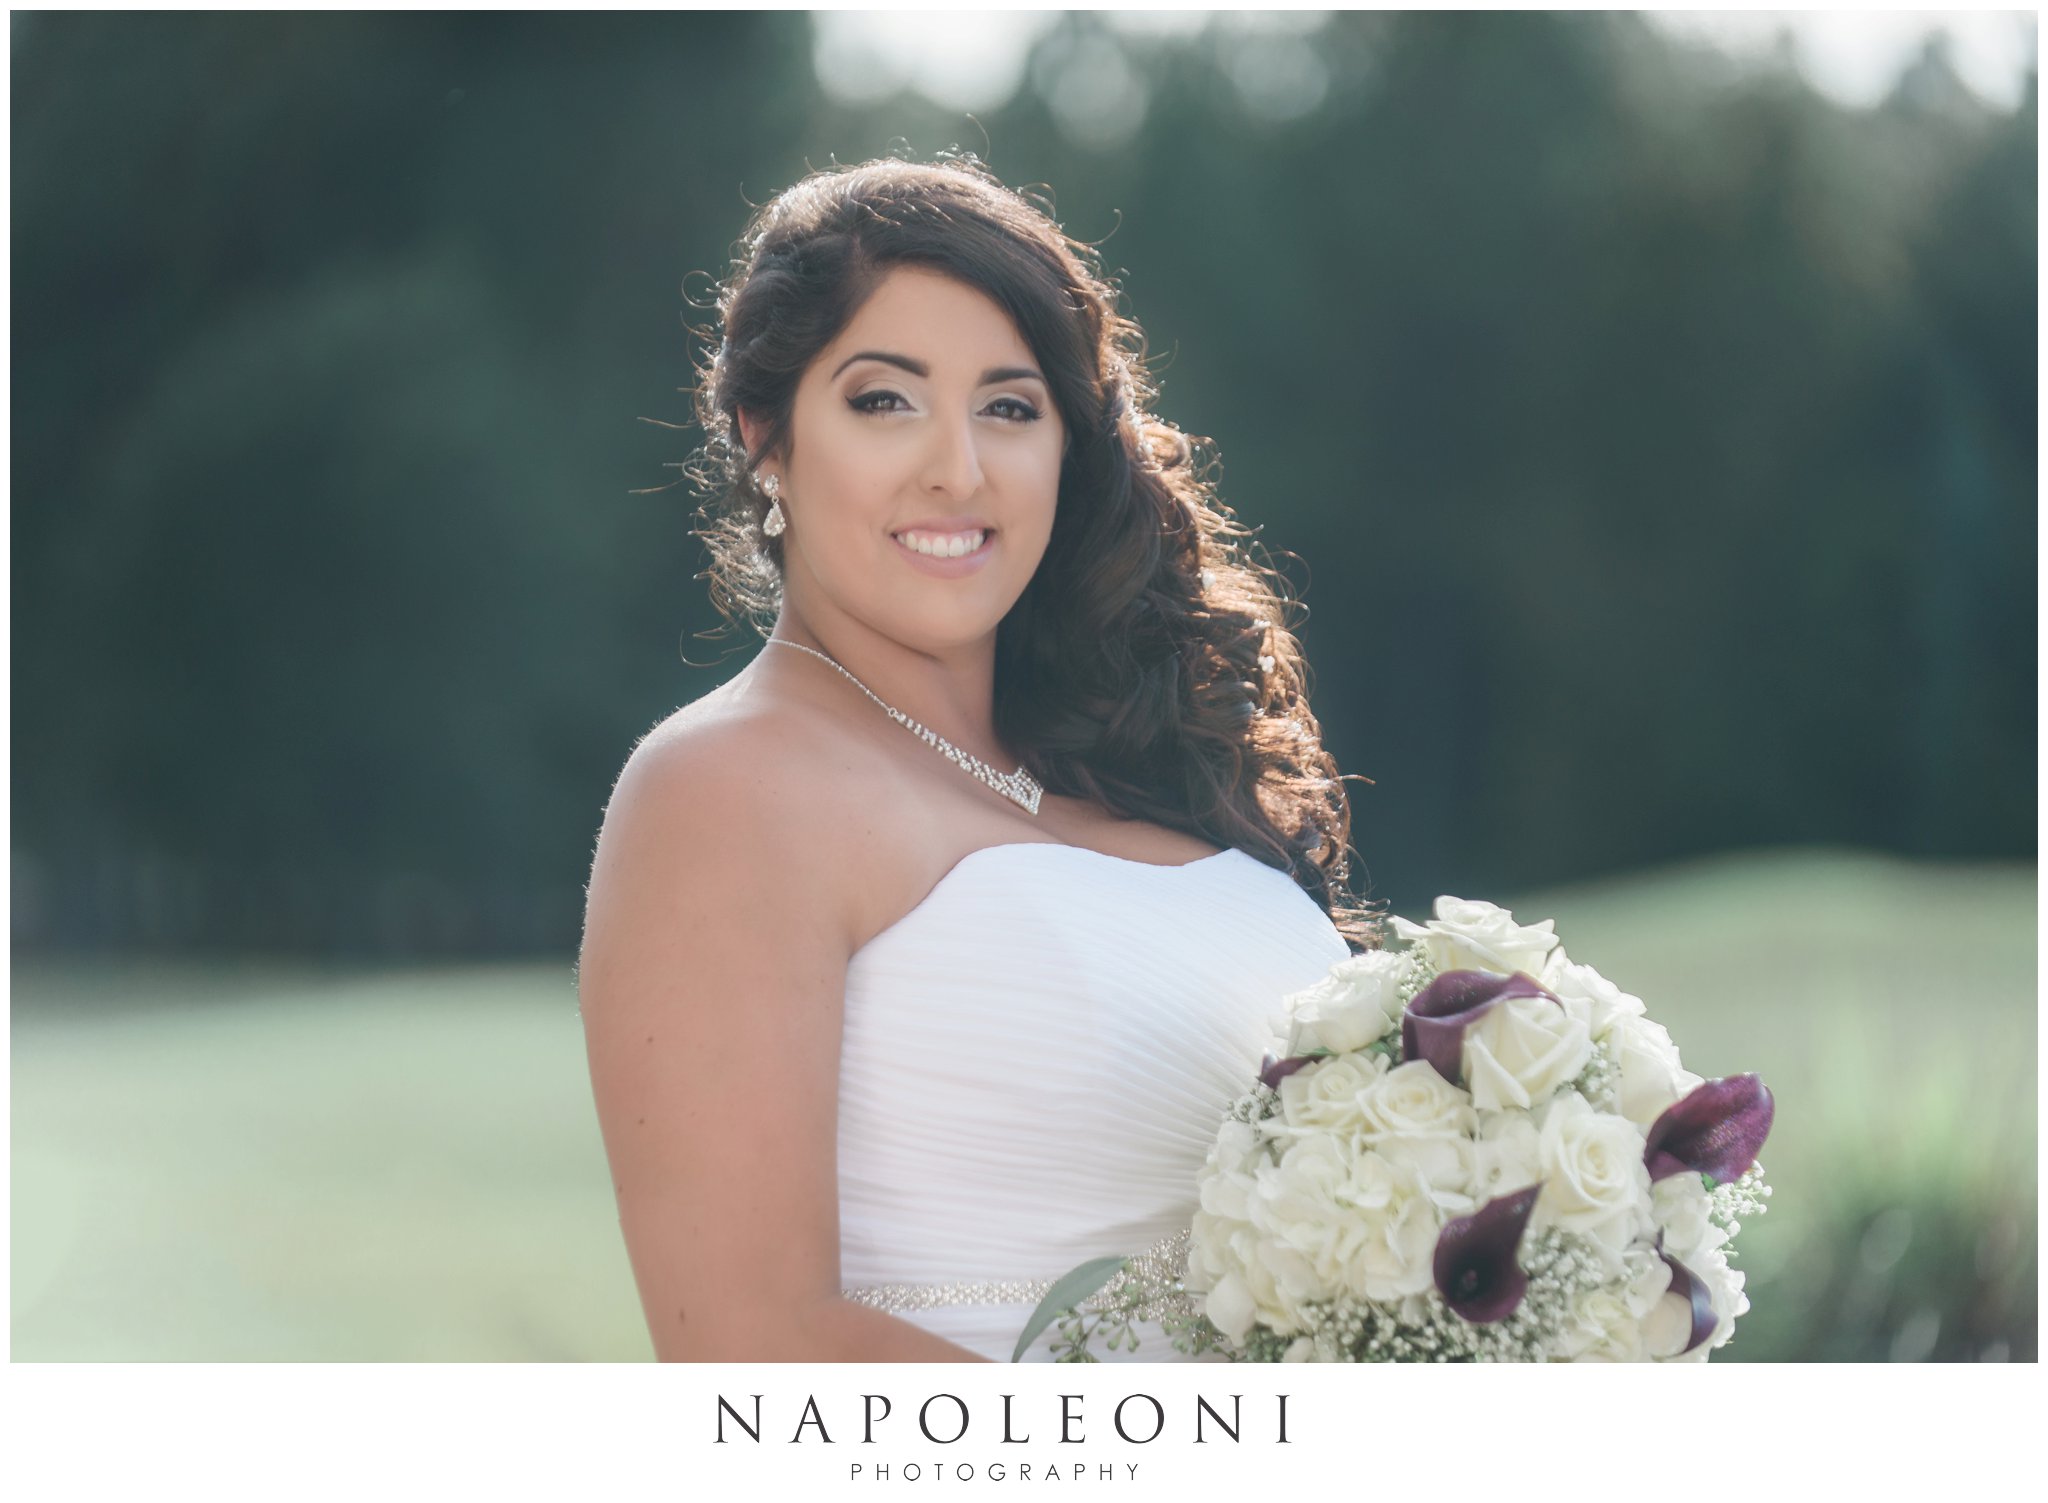 napoleoni-photography_0416